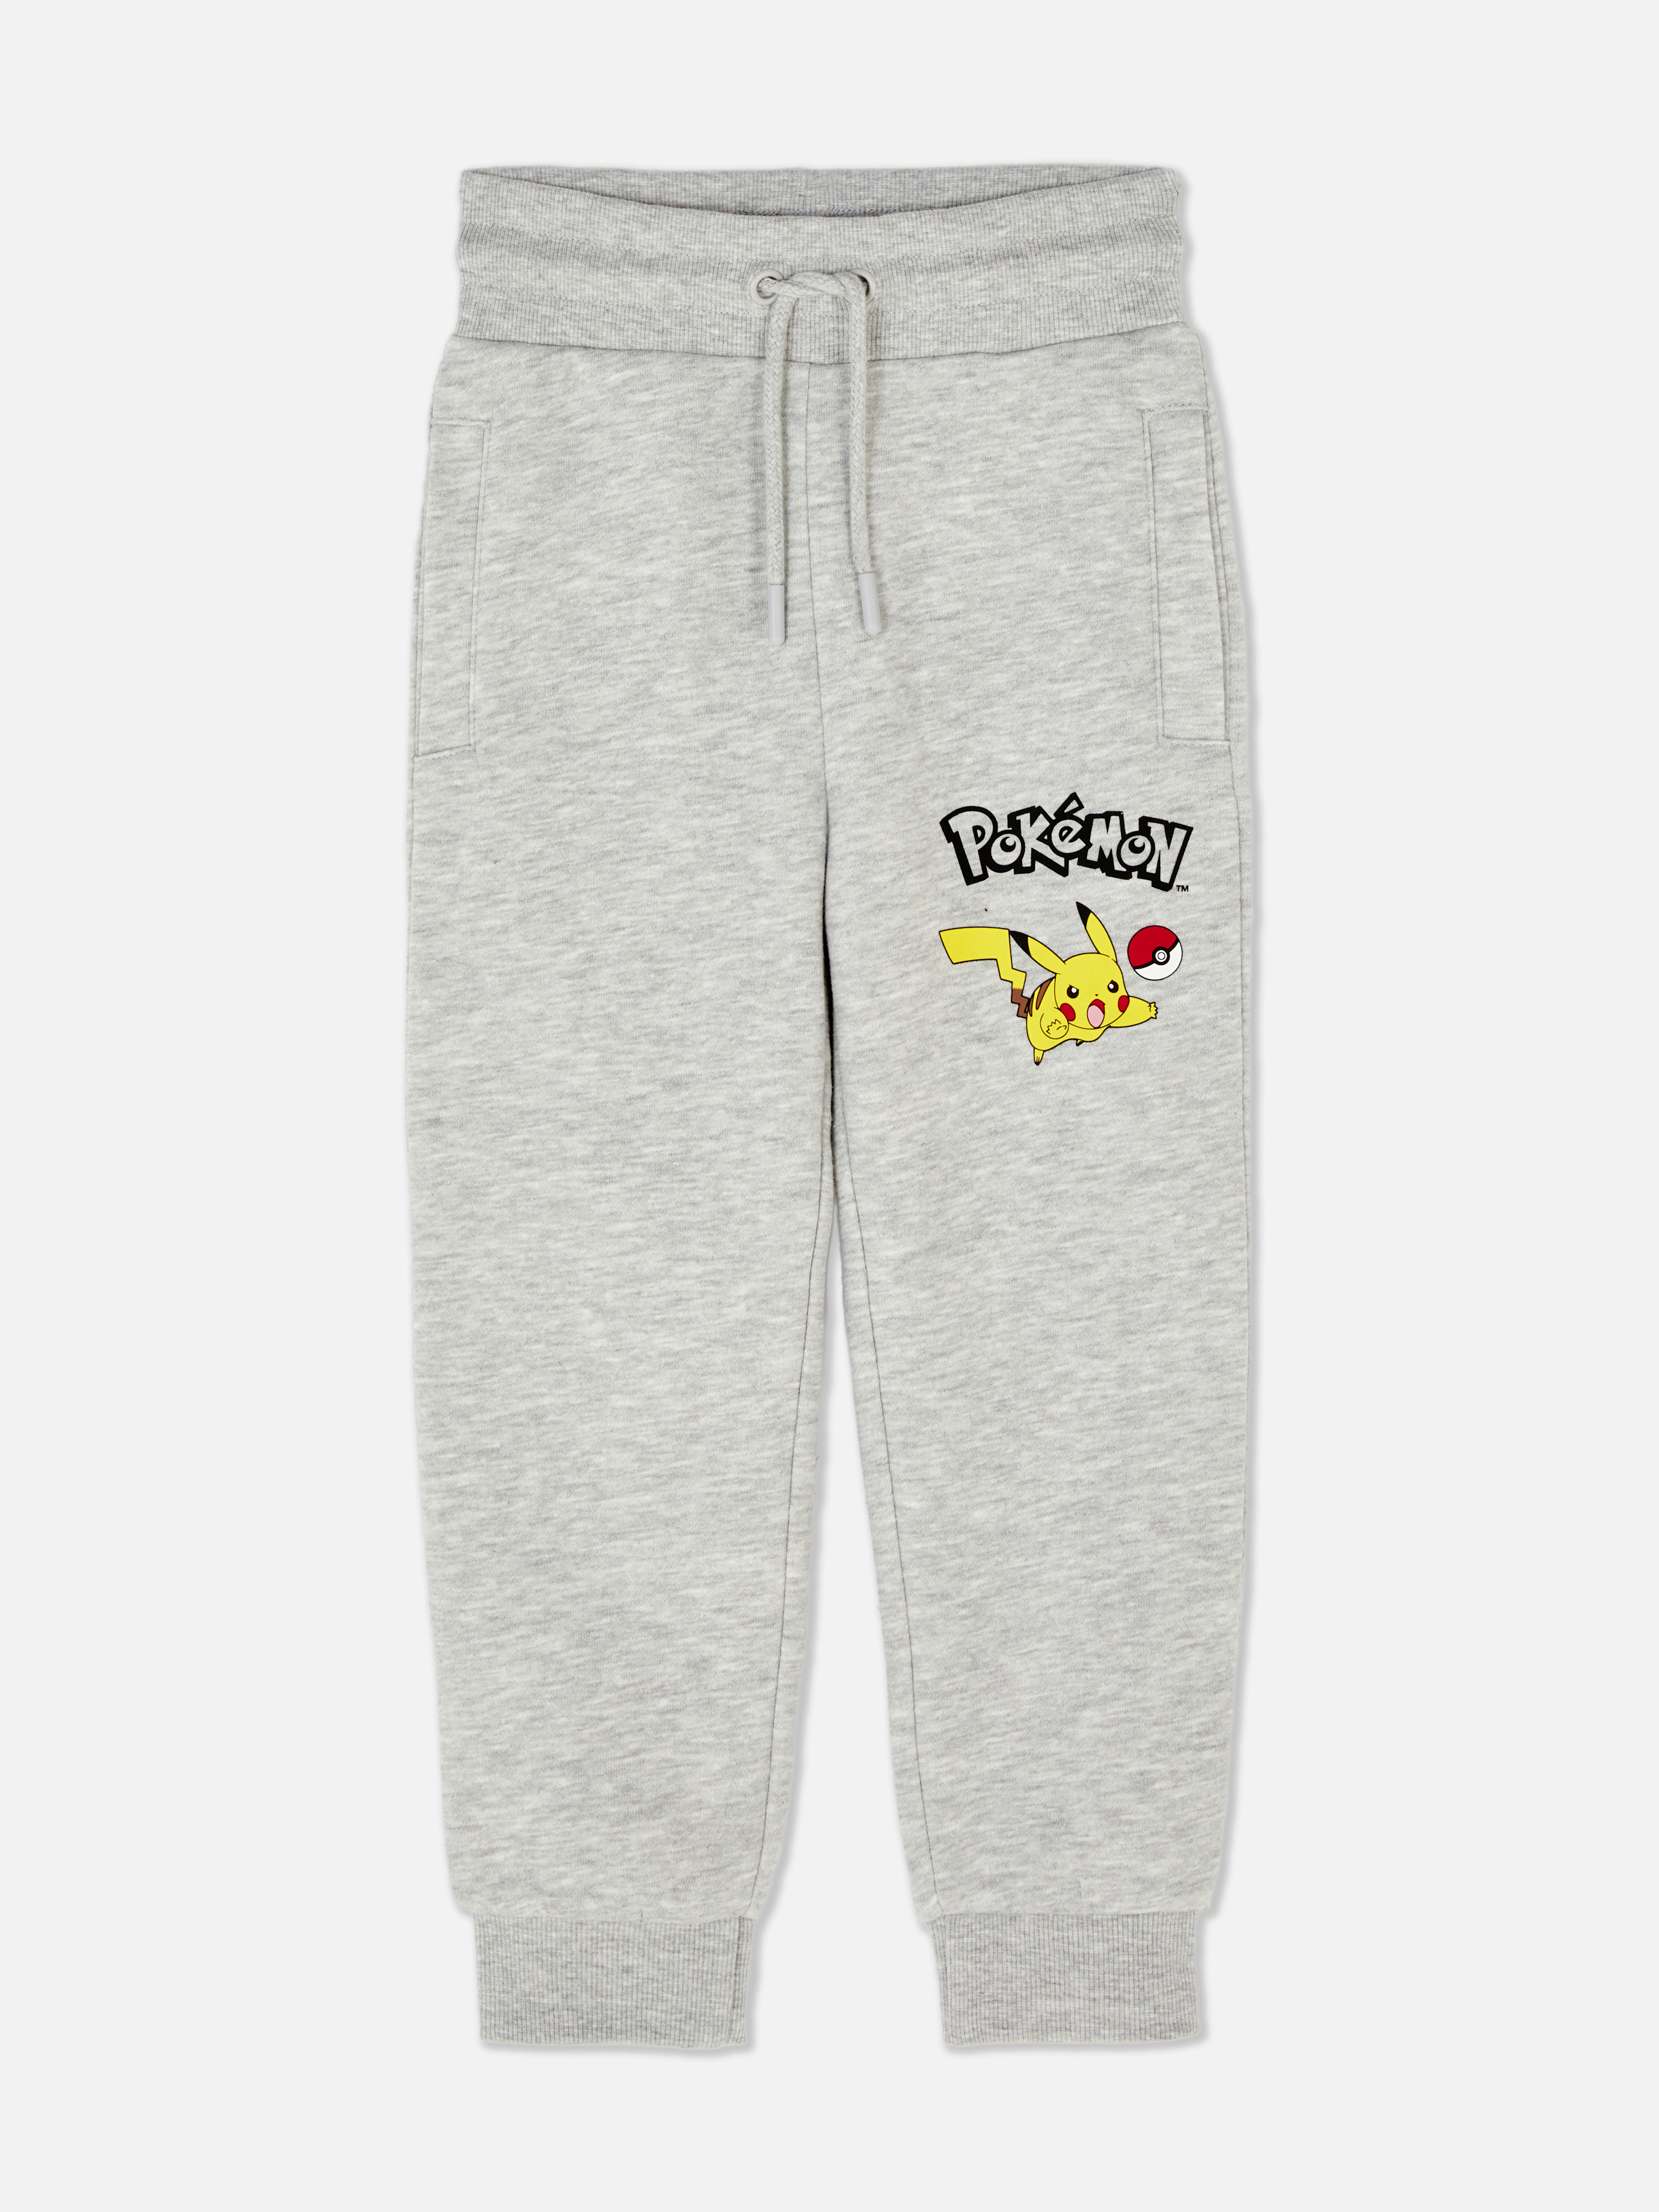 Pokémon Pikachu Joggers